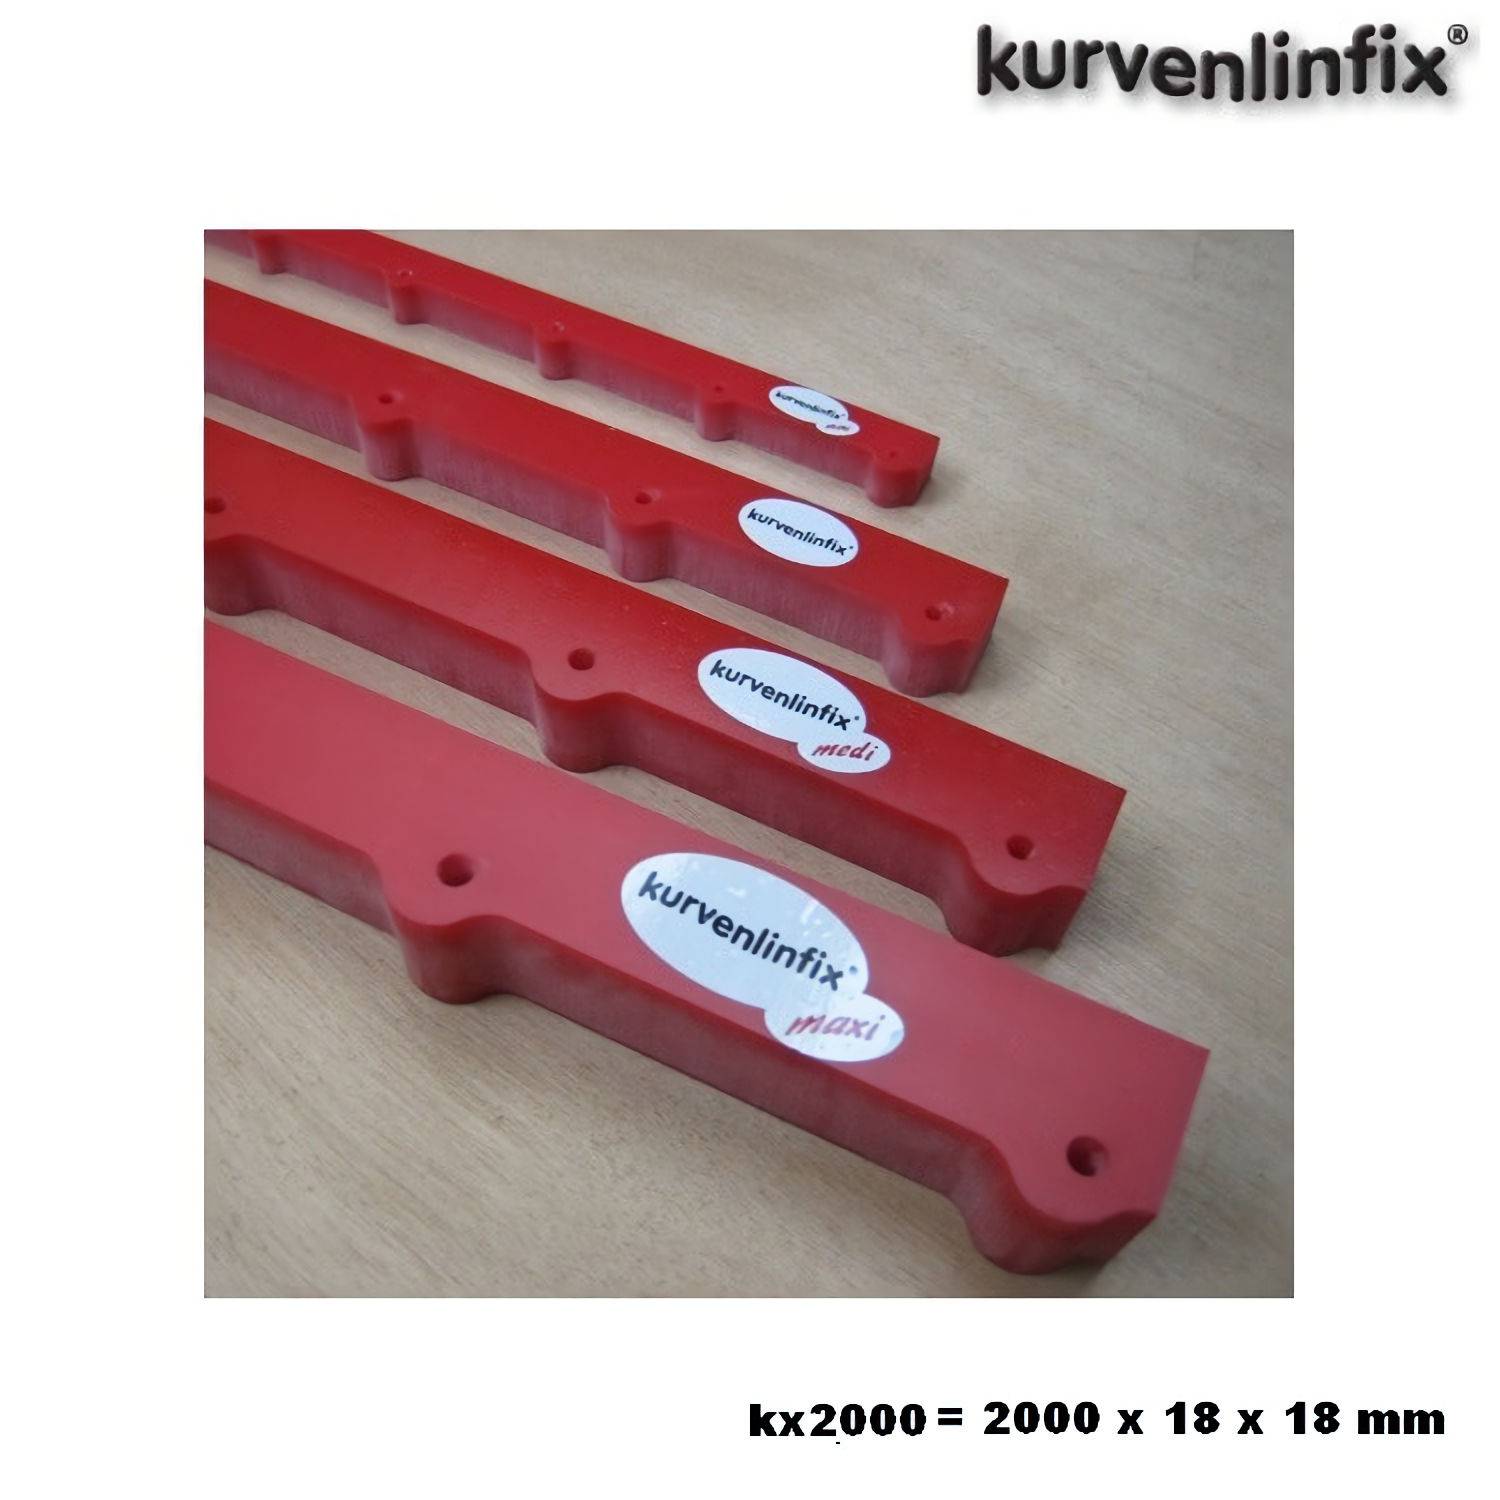 kurvenlinfix-kx2000